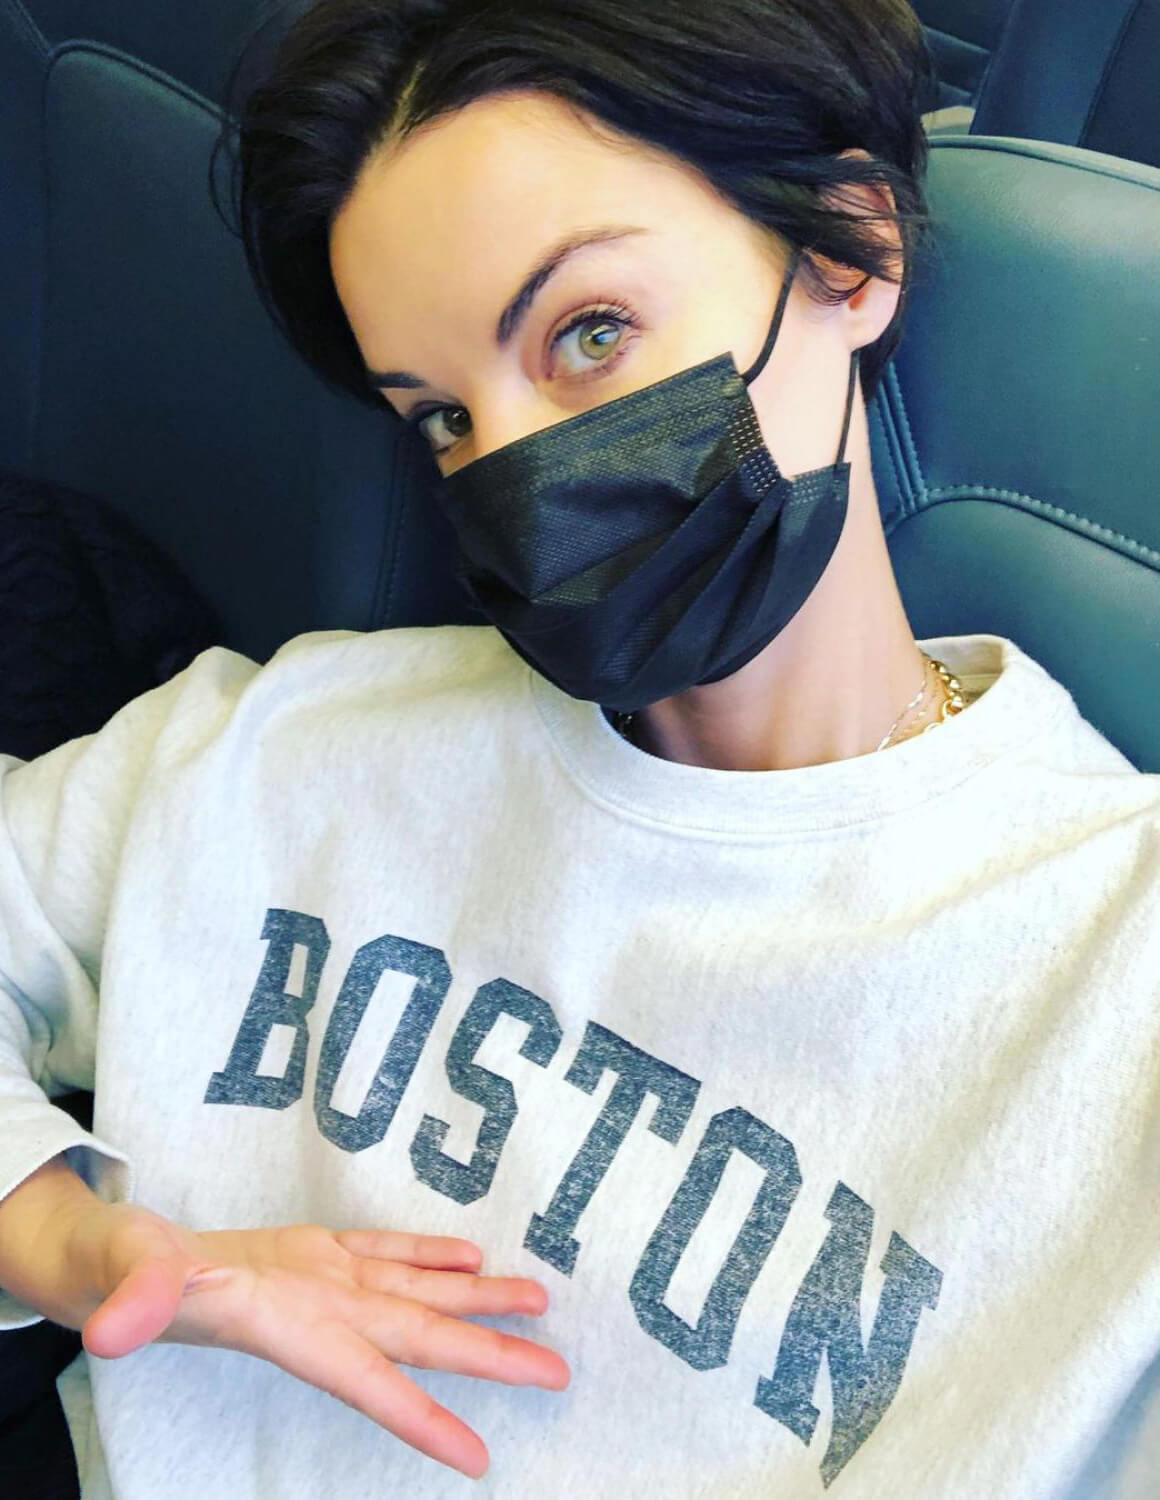 Jaimie Alexander wearing Black Face Mask - Instagram Photos 12/05/2020 1